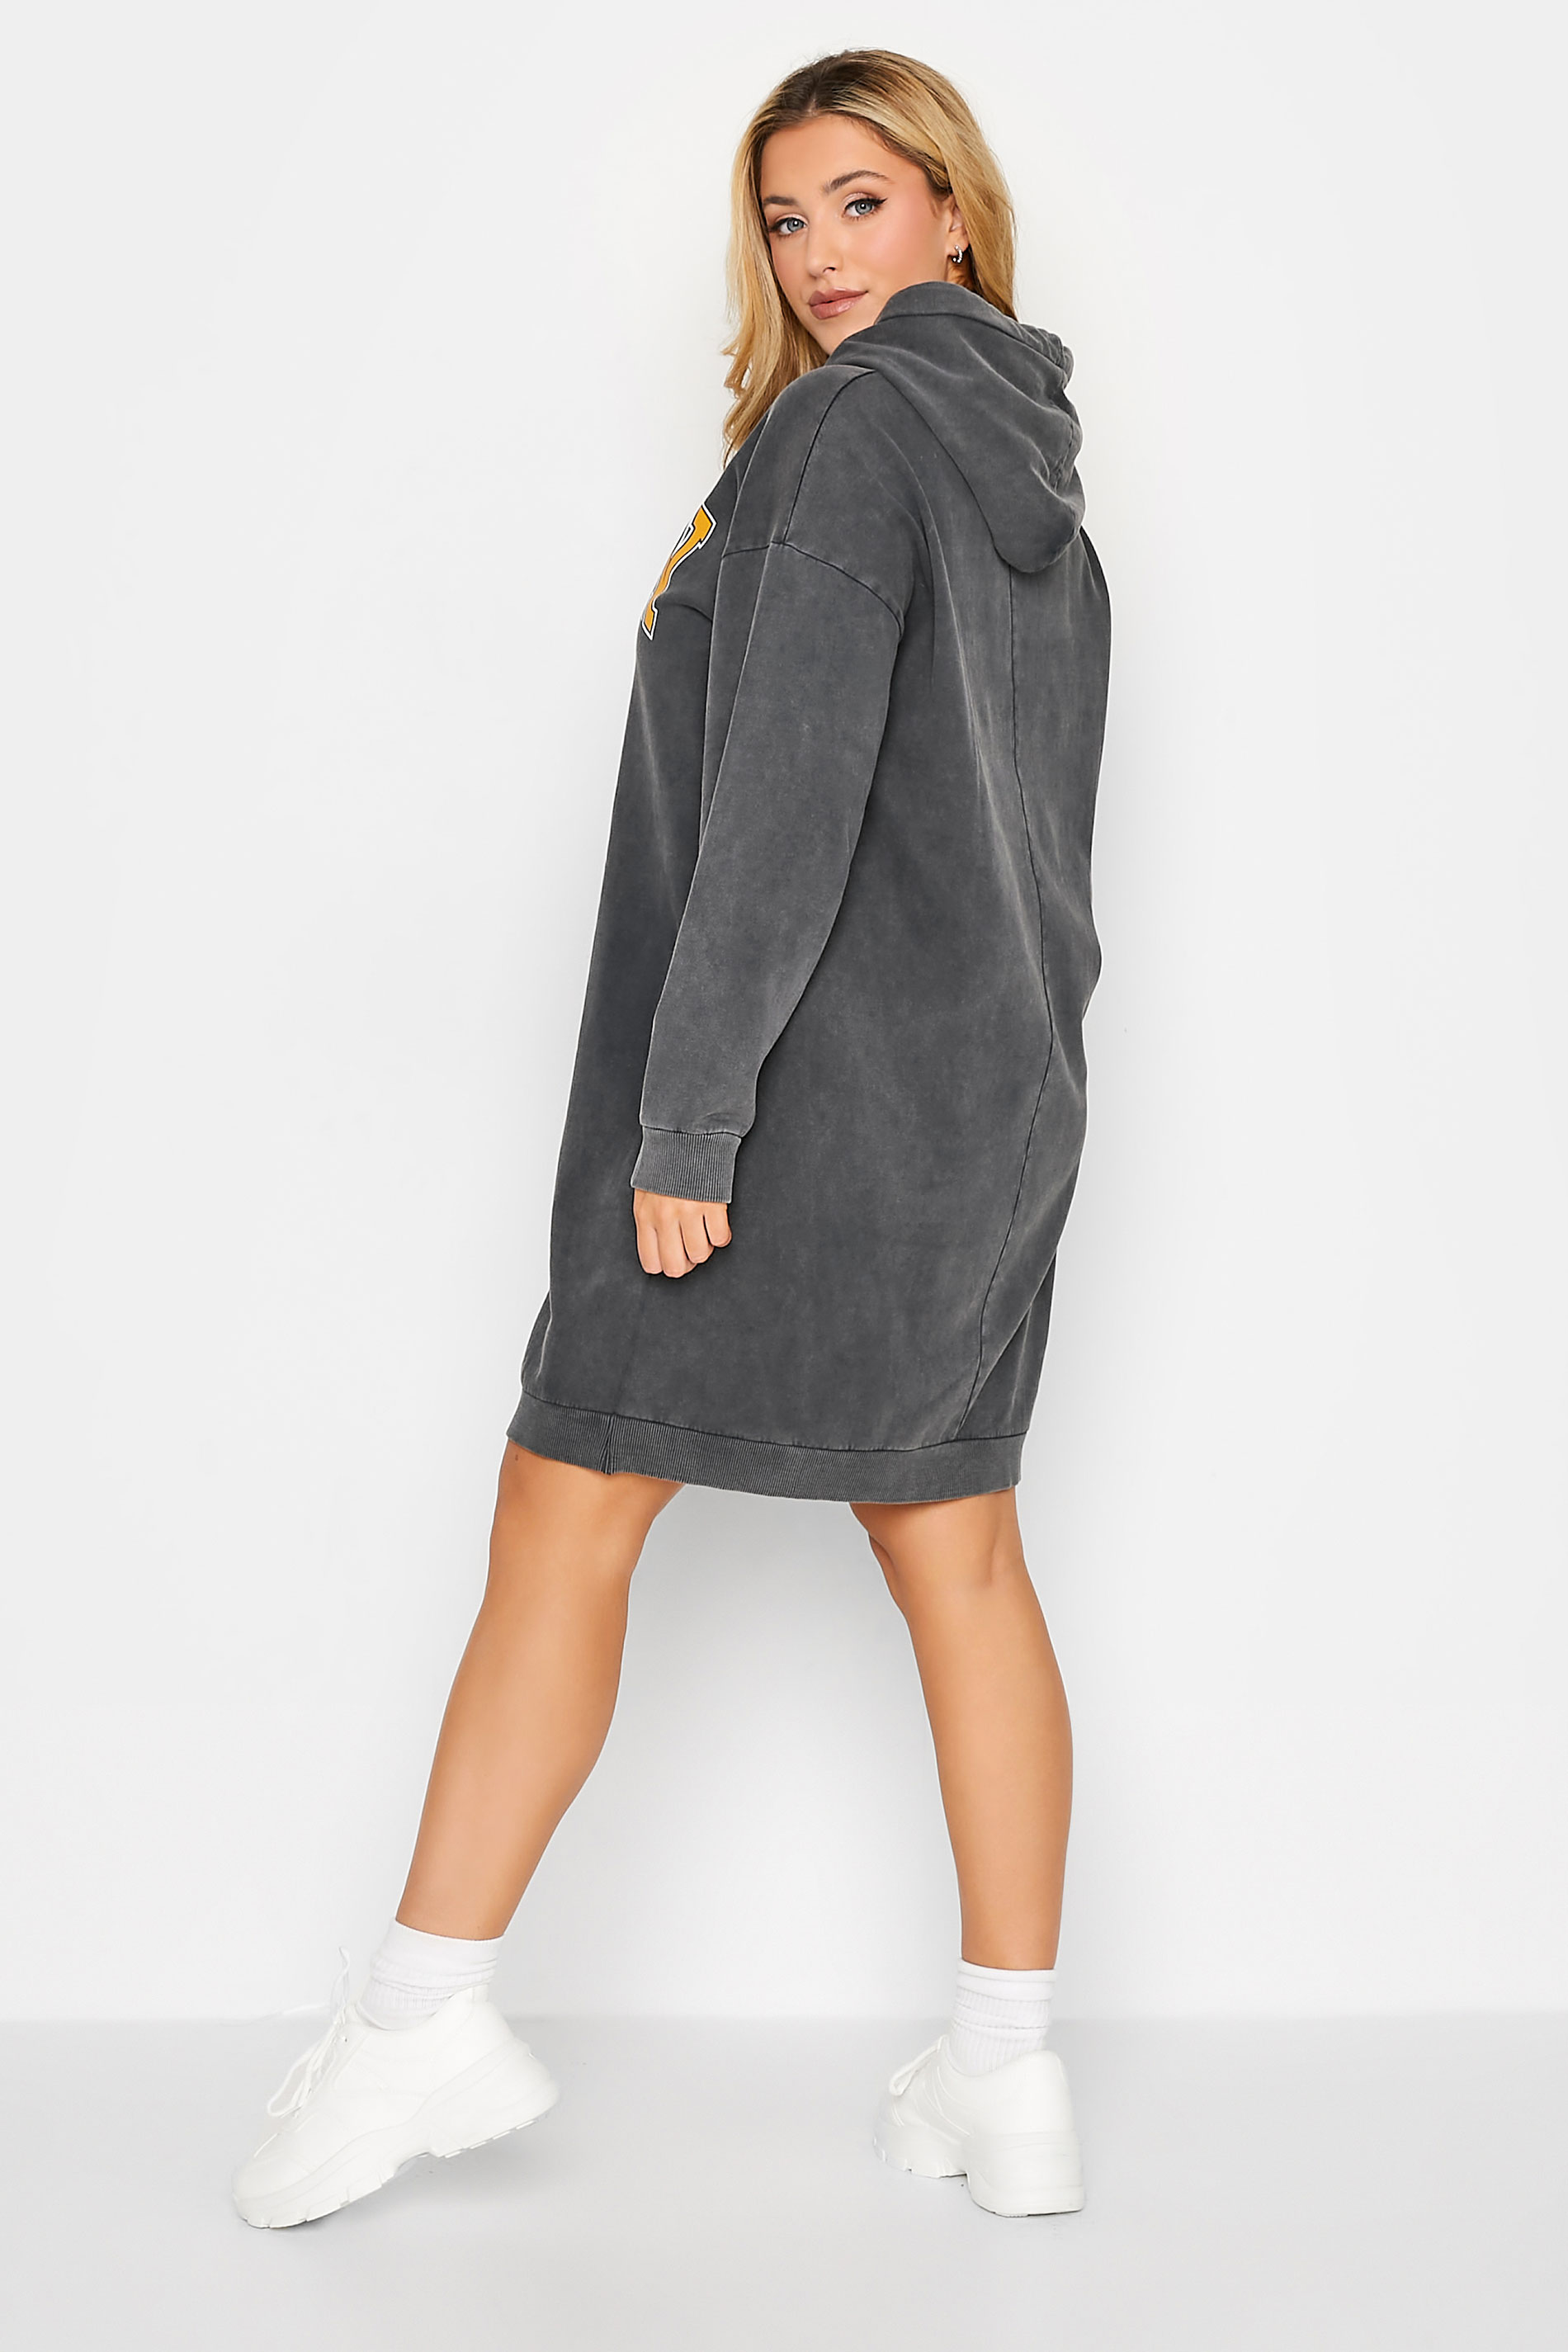 Plus Size Grey 'London' Slogan Hoodie Dress | Yours Clothing 3